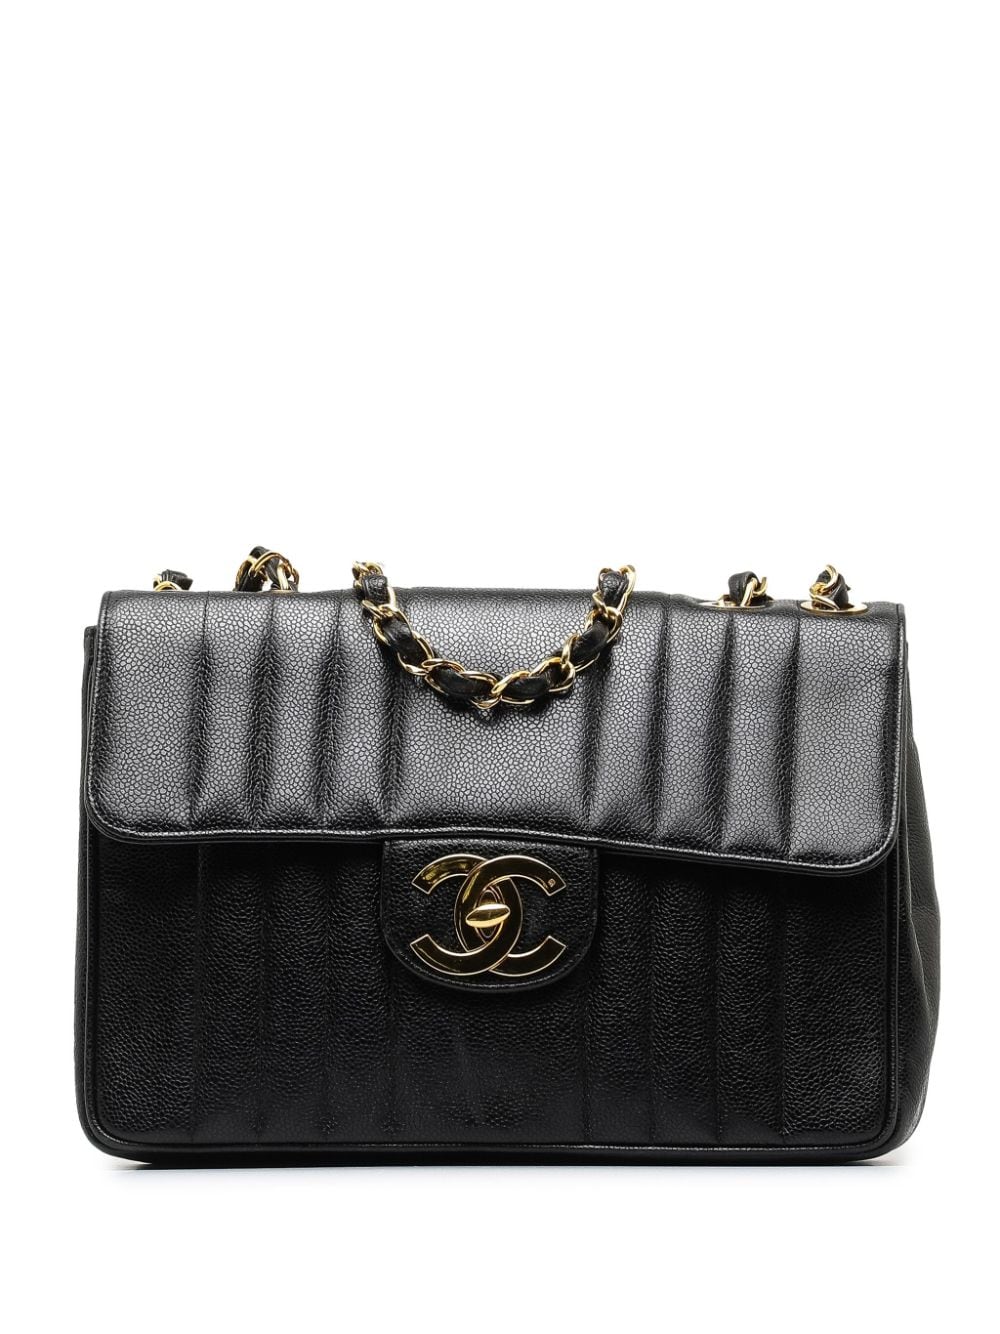 Pre-owned Chanel 1991-1994 Jumbo Caviar Mademoiselle Flap Shoulder Bag In Black